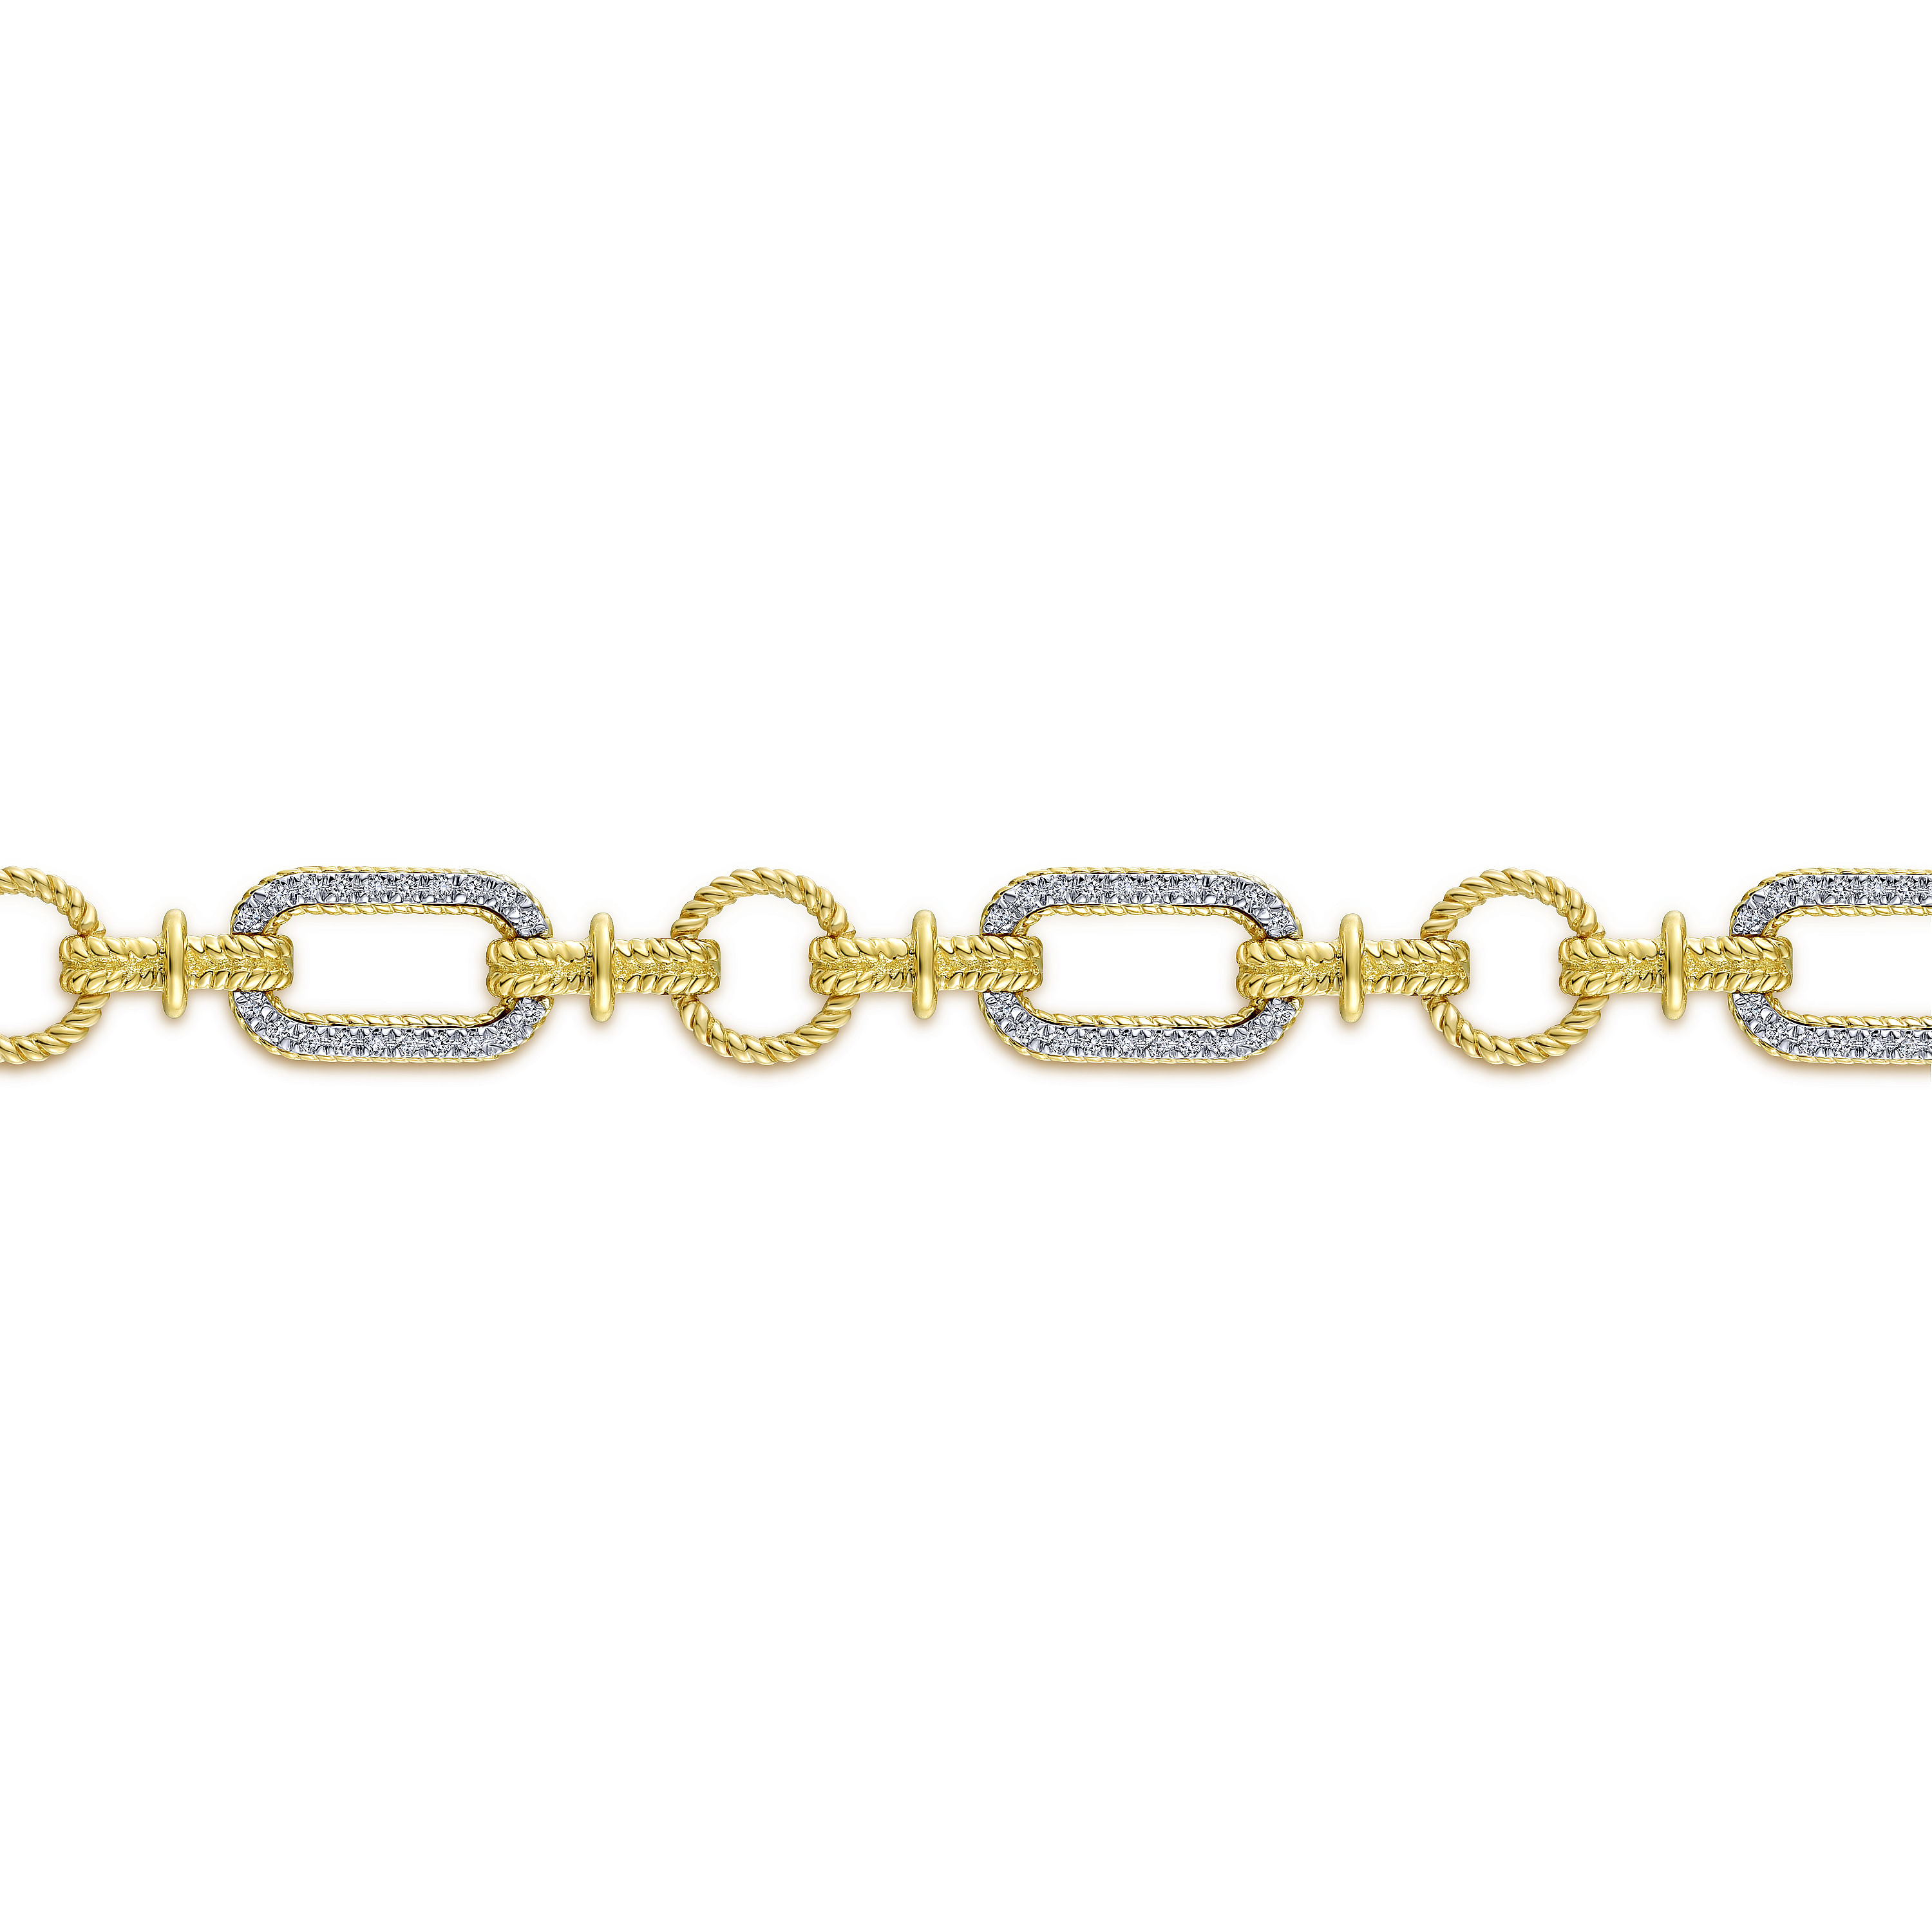 14K Yellow and White Gold Diamond Bracelet with Alternating Links - 0.5 ct - Shot 2